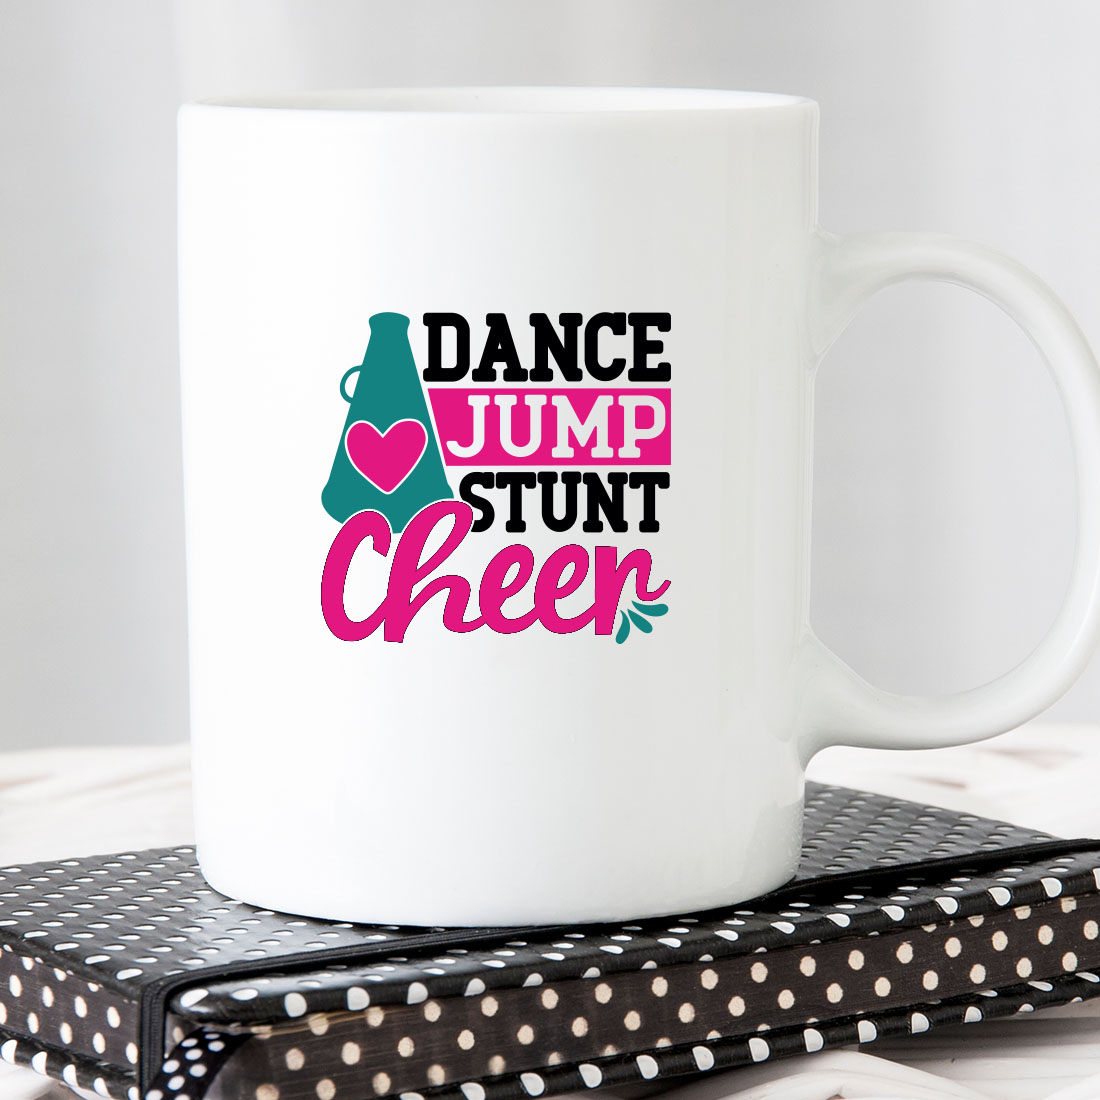 White coffee mug that says dance jump stunt cheer.